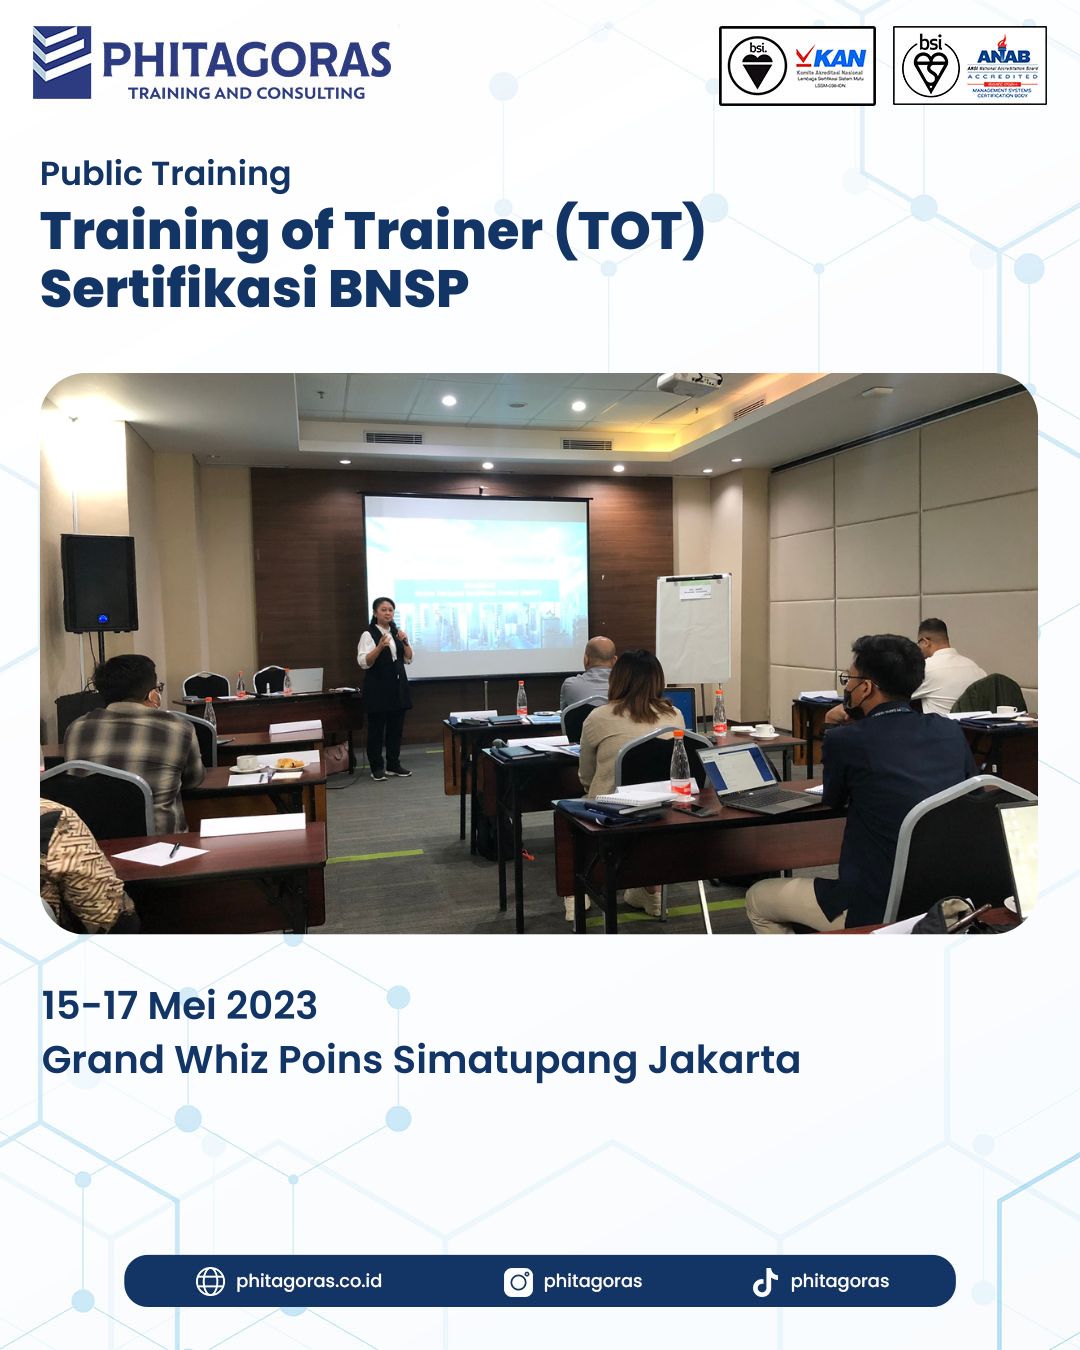 Public Training - Training of Trainer Sertifikasi BNSP 15-17 Mei 2023